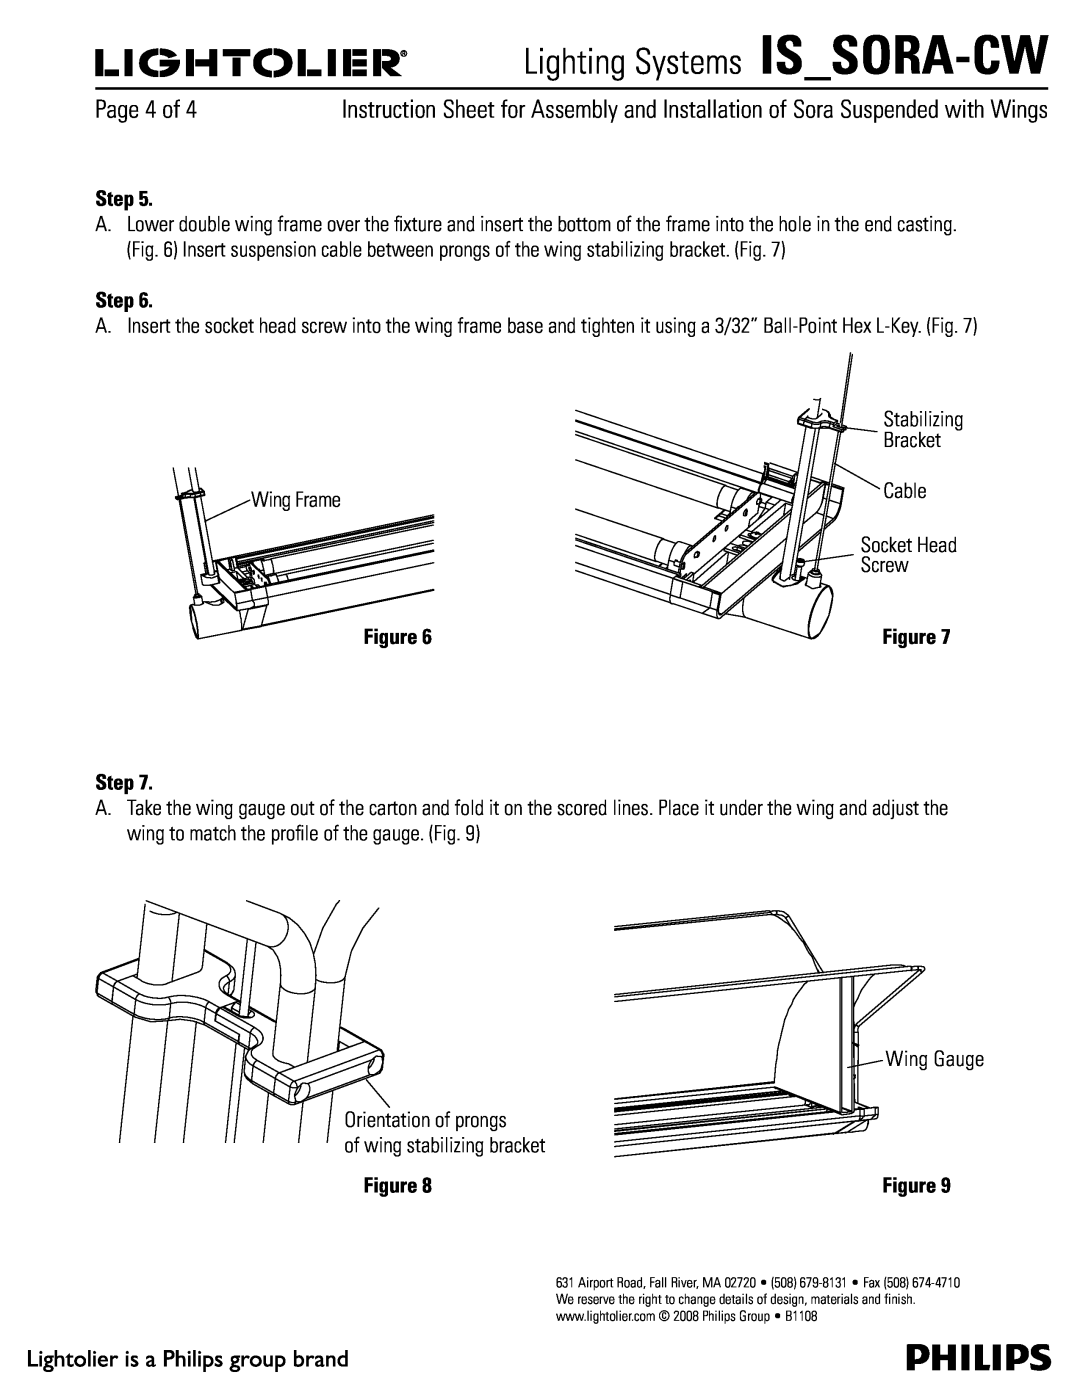 Lightolier IS_SORA-CW manual Step, Stabilizing Bracket, Wing Frame, Socket Head Screw, Wing Gauge, Cable 